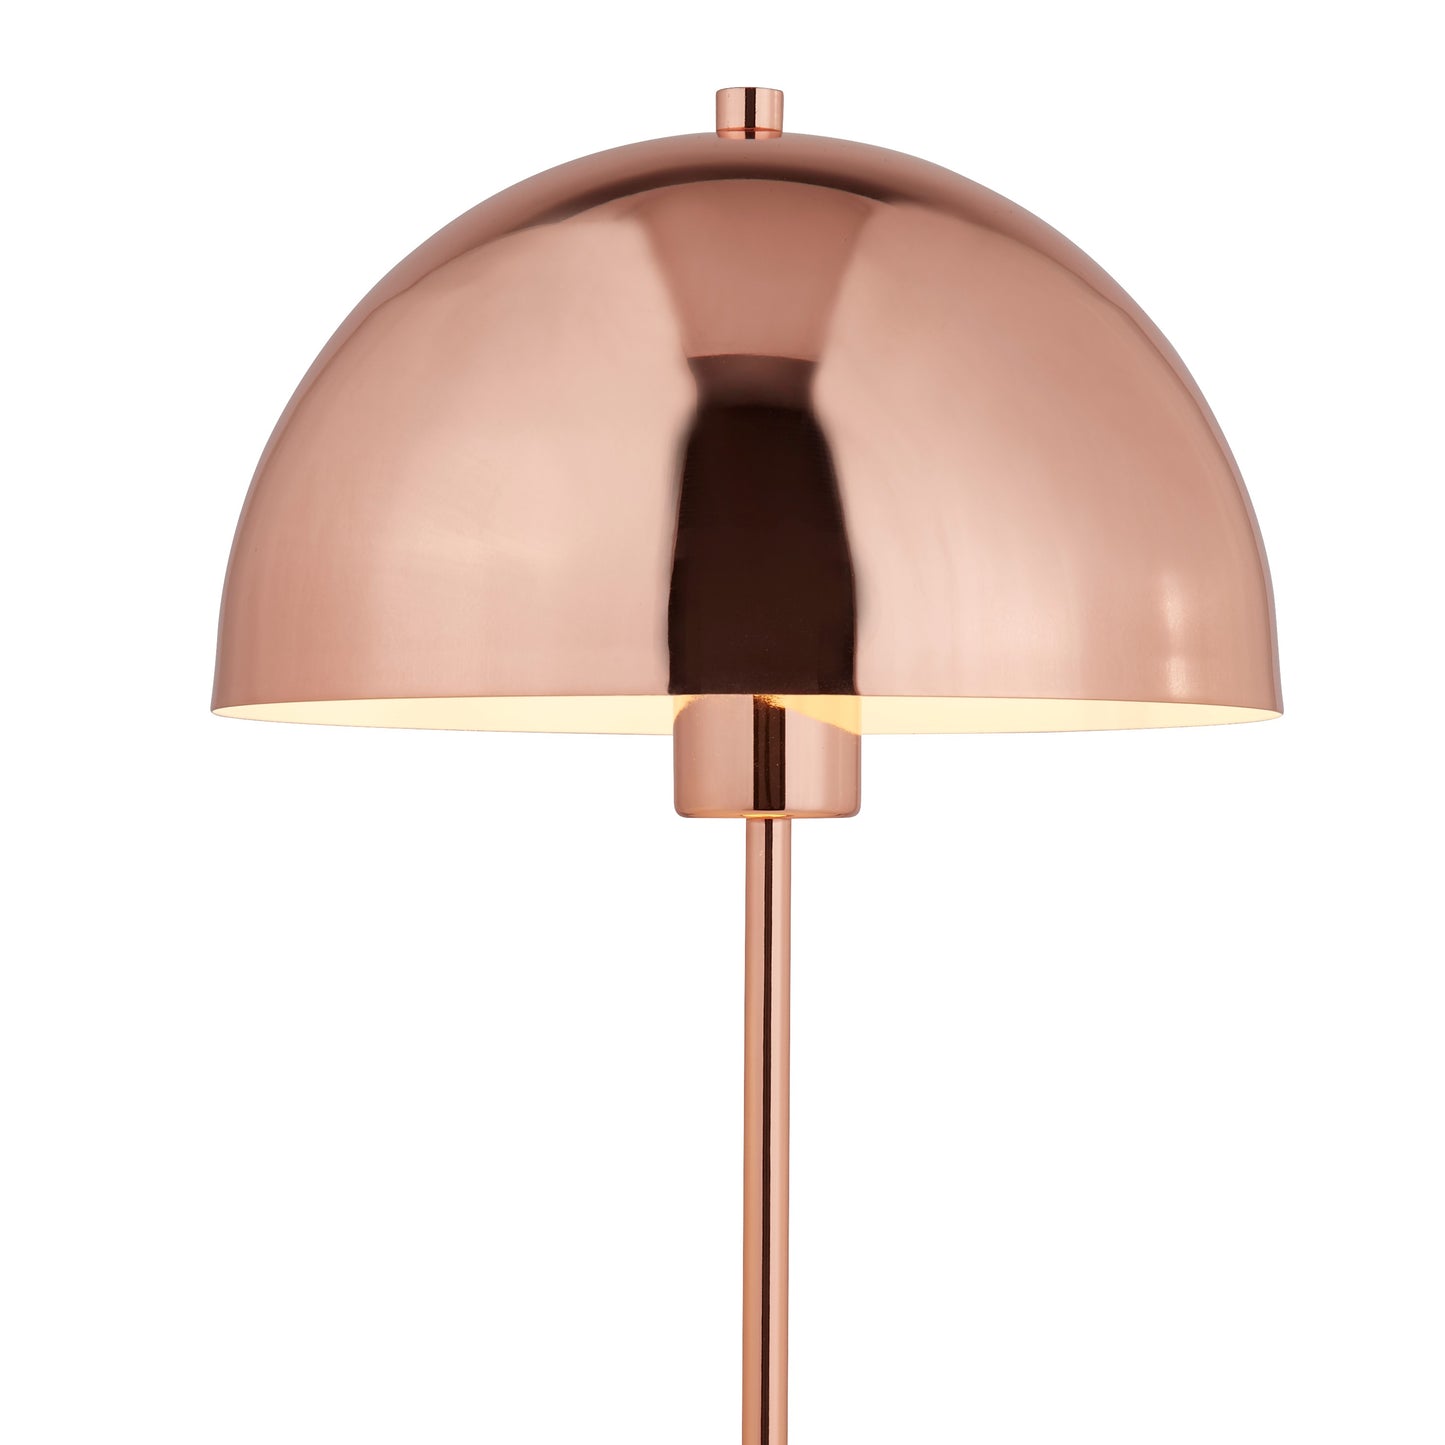 CGC CHARLES Copper Dome Mushroom Table Lamp